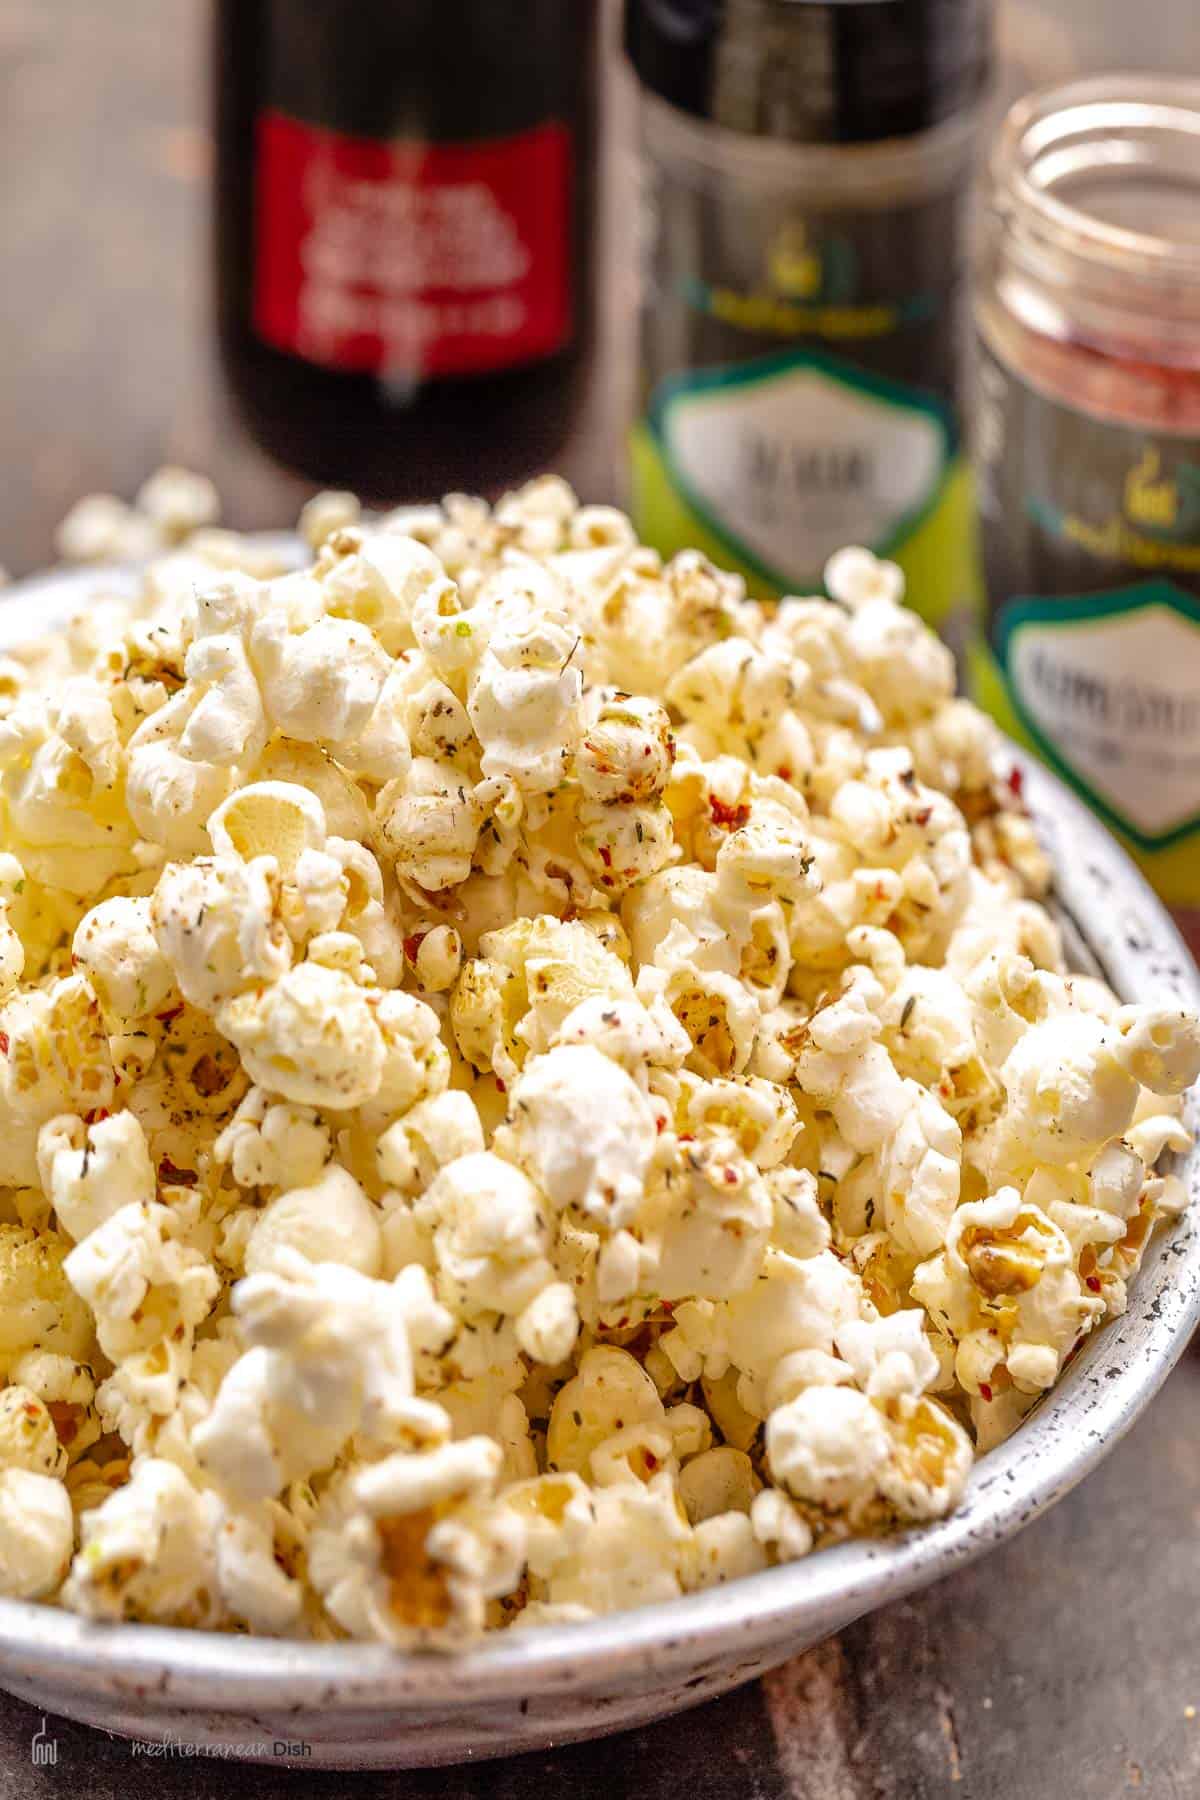 https://www.themediterraneandish.com/wp-content/uploads/2022/01/homemade-popcorn-with-zaatar-recipe-7.jpg